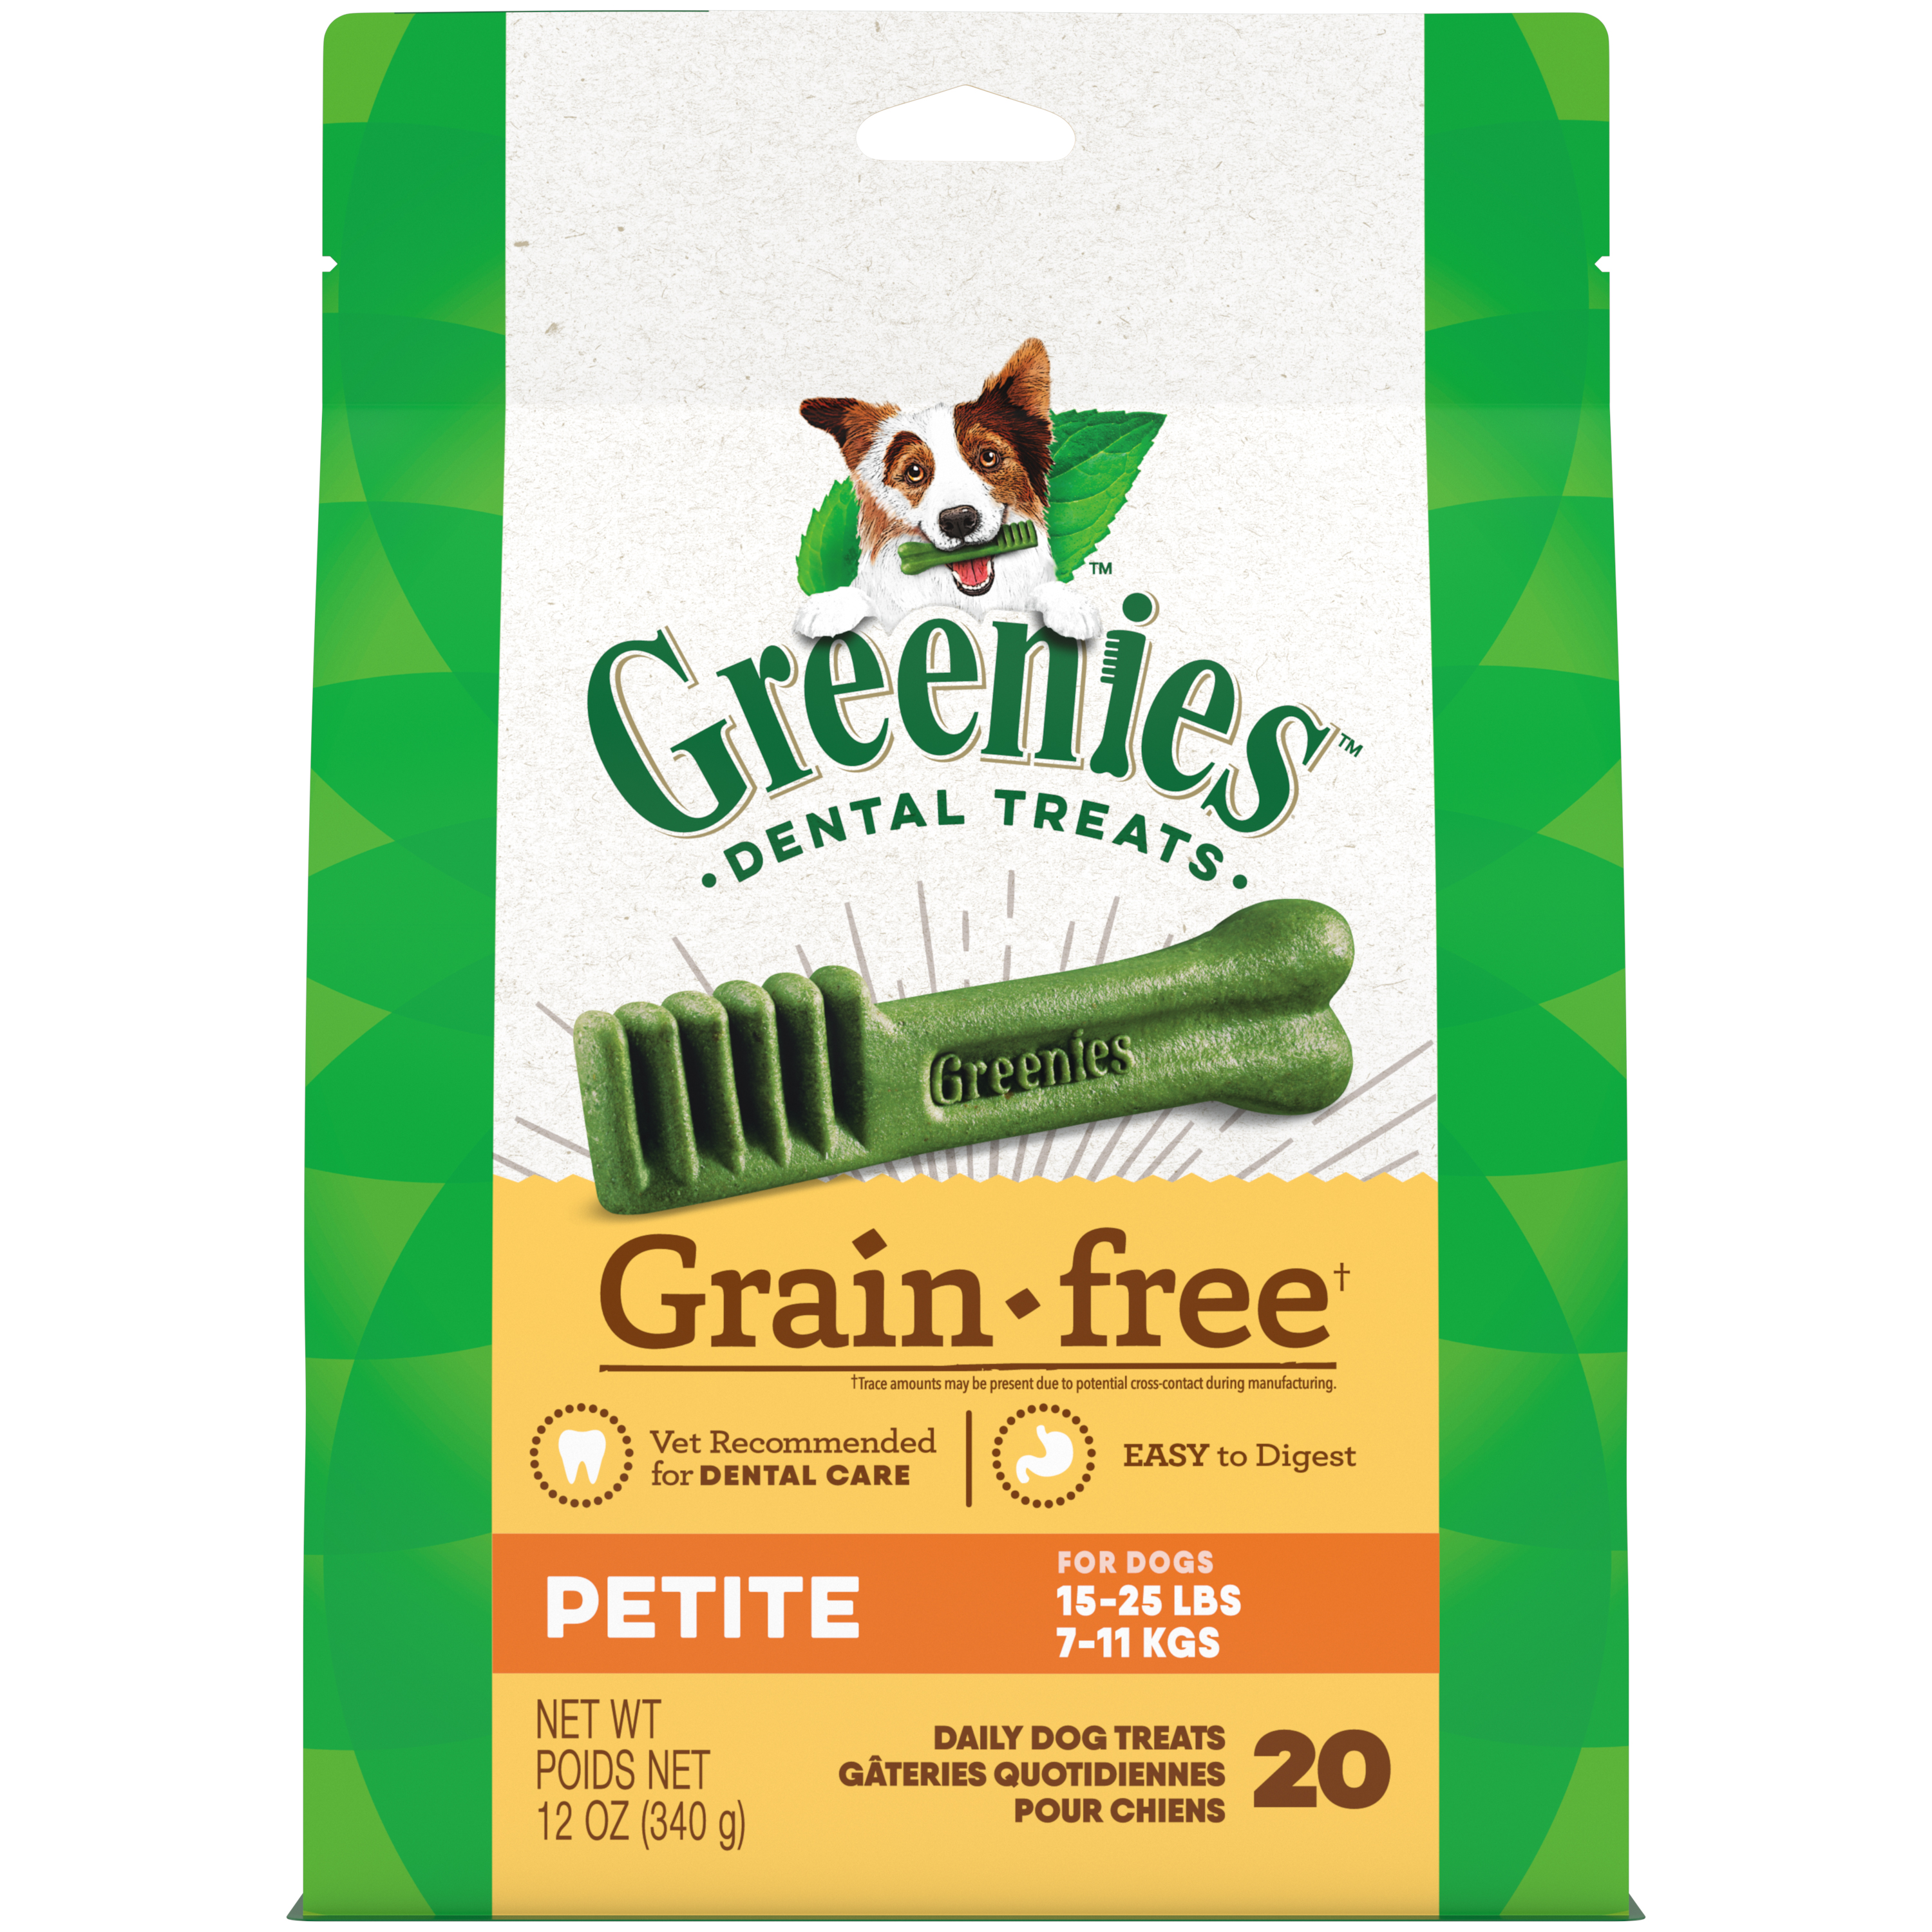 12 oz. Greenies Grain Free Petite Treat Pack - Health/First Aid